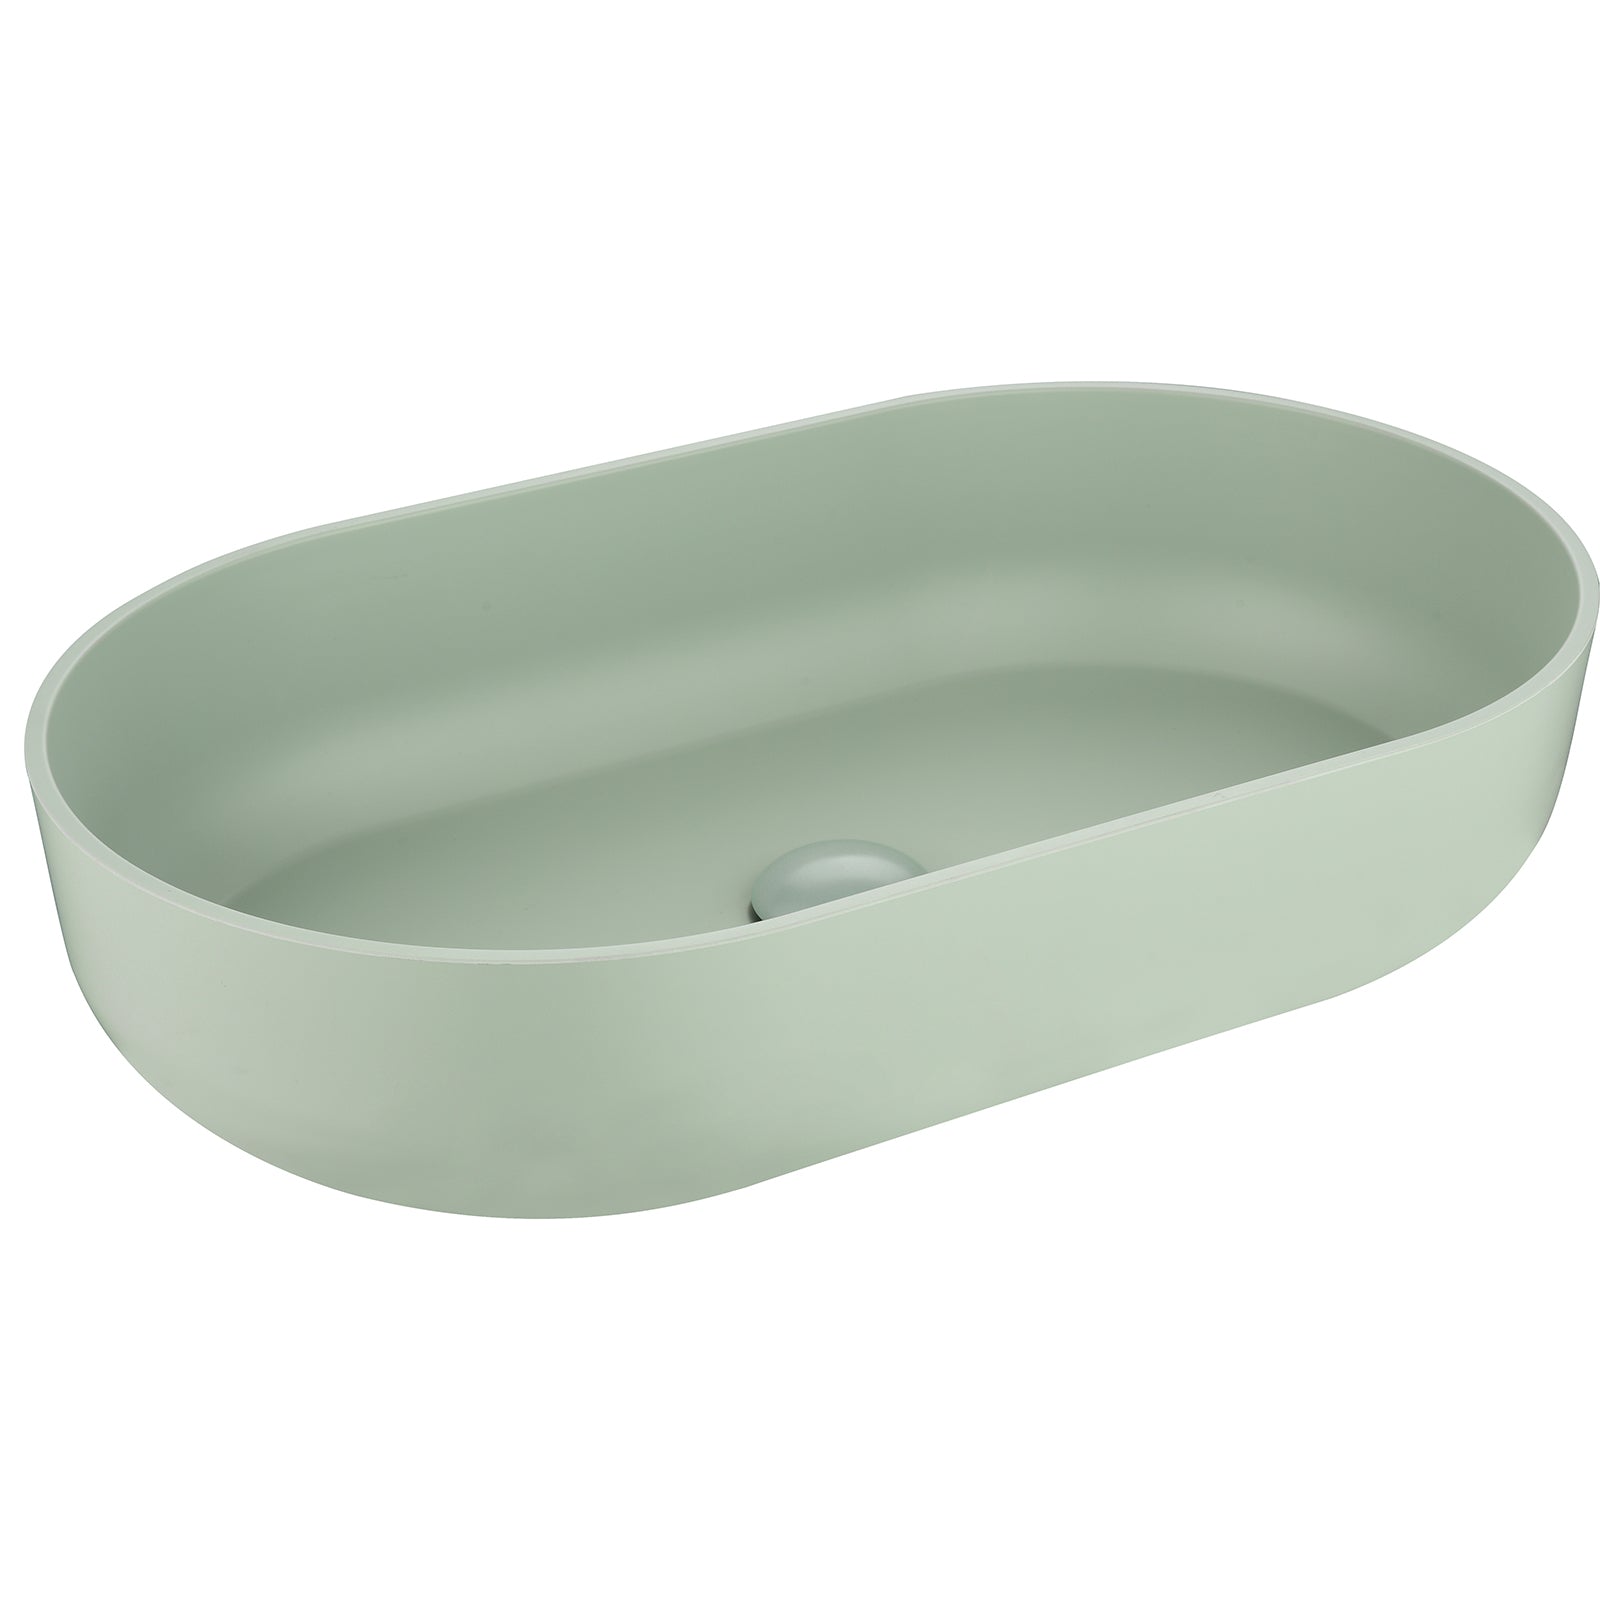 Green 24*14*5.5 Modern Oval Above Bathroom Vessel Sink for Lavatory Vanity Cabinet